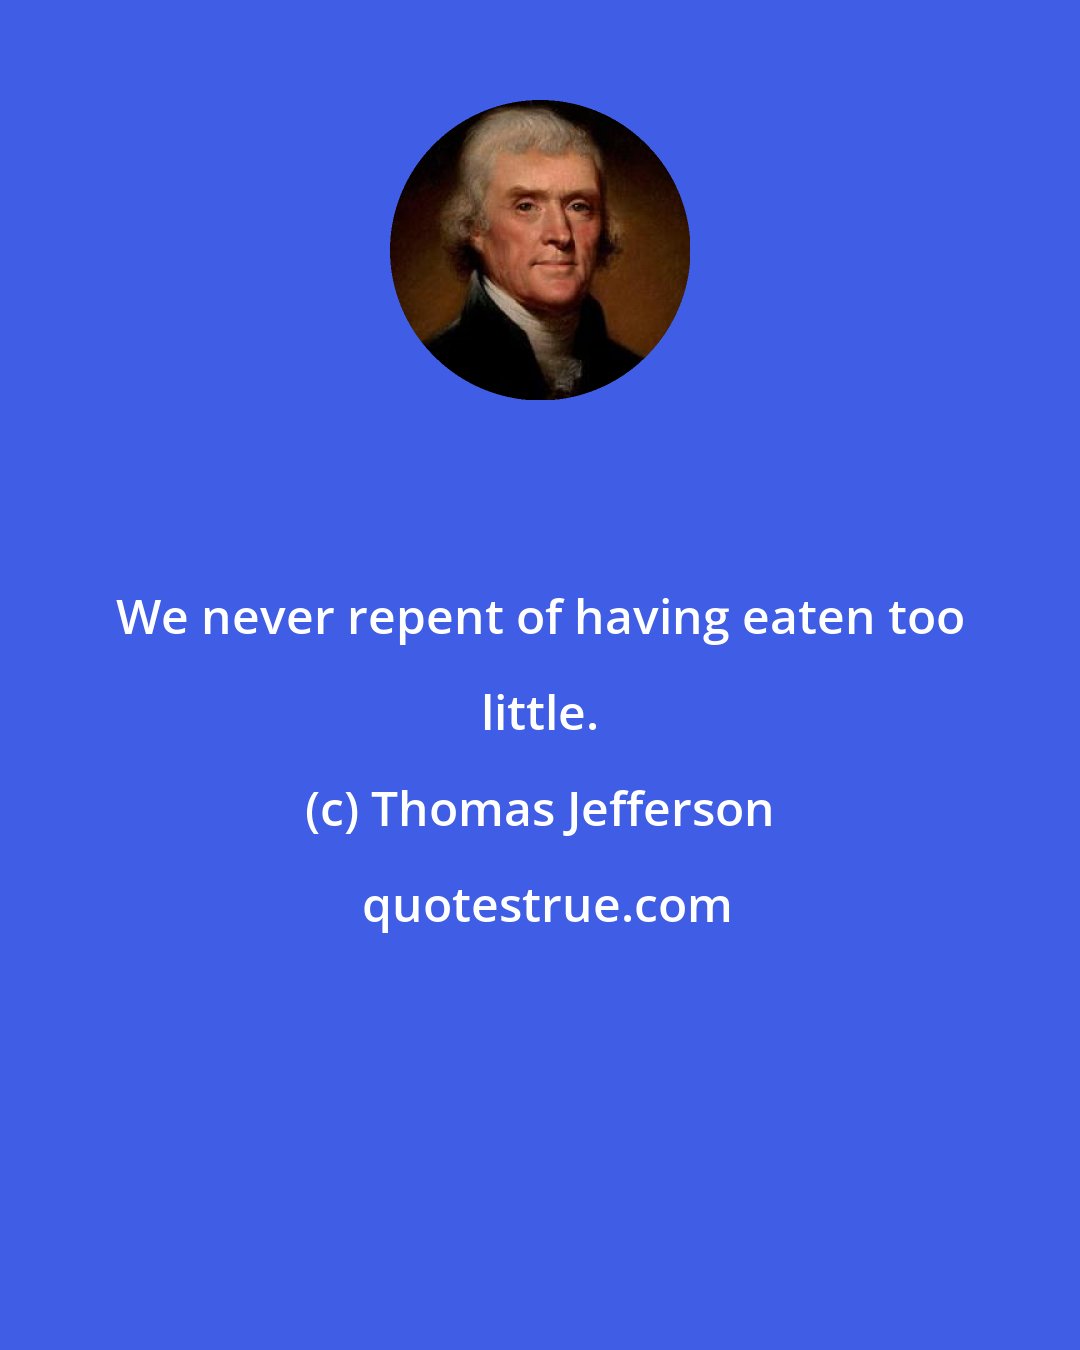 Thomas Jefferson: We never repent of having eaten too little.